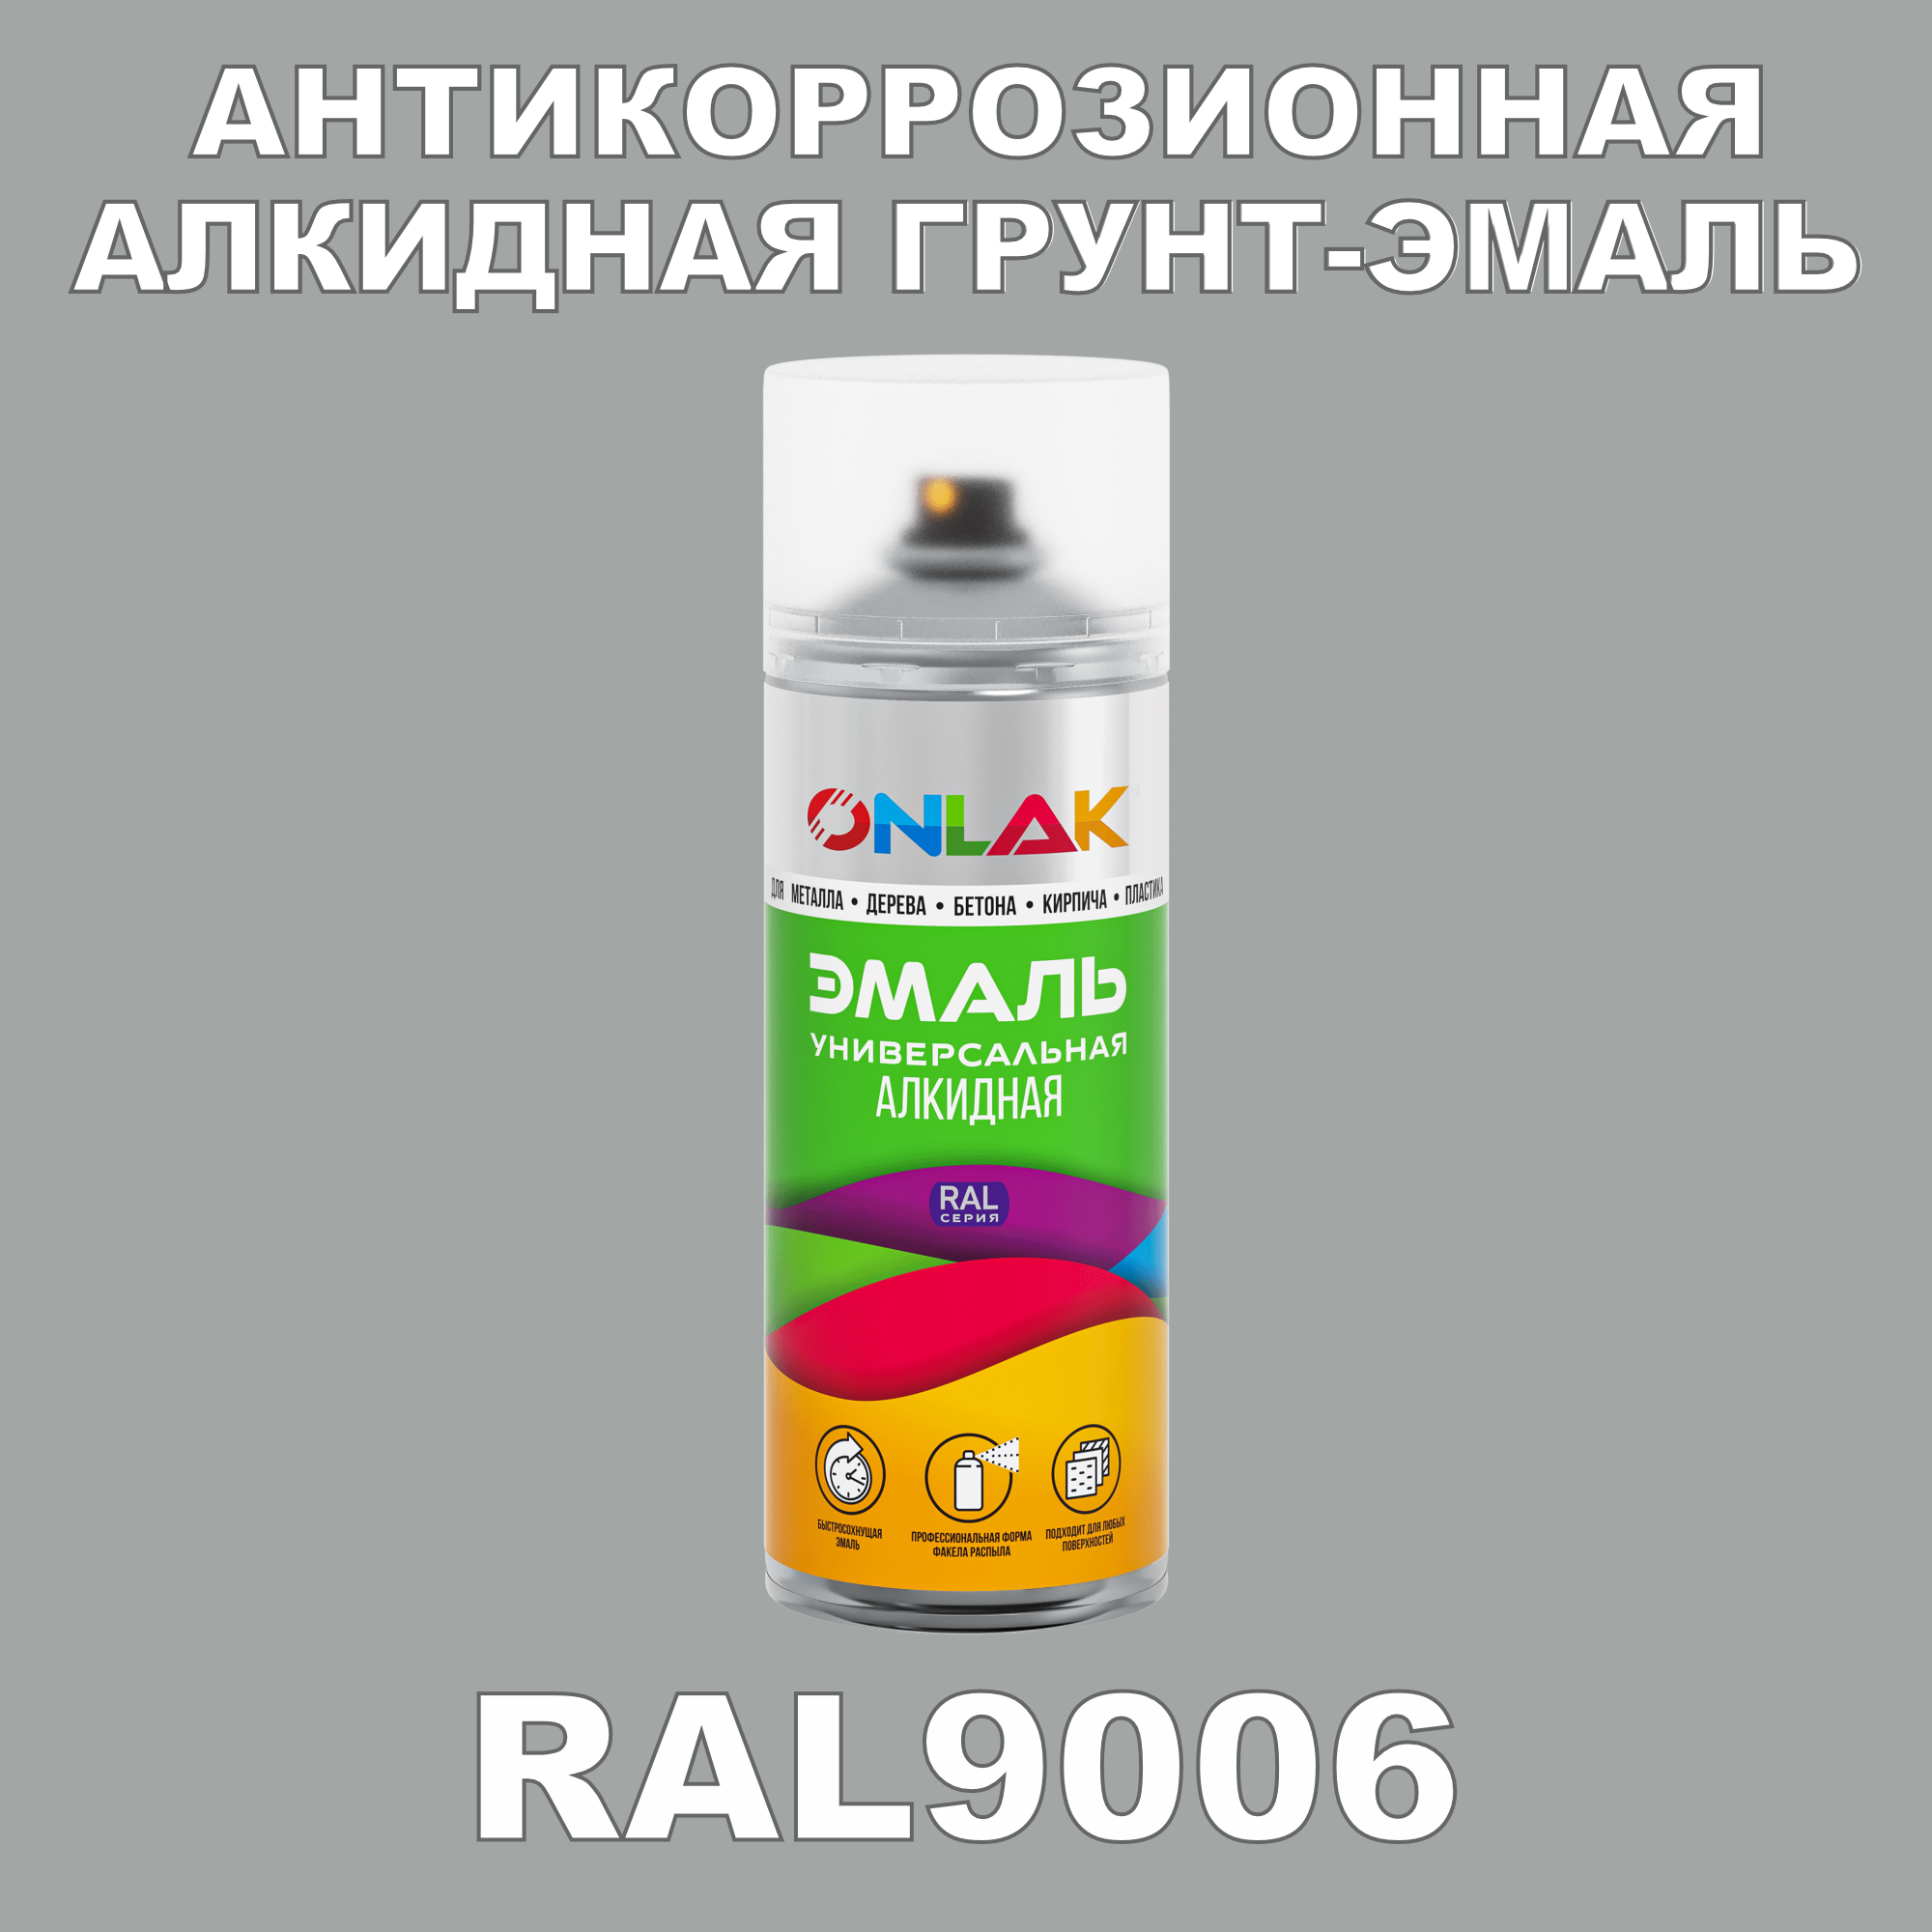 Антикоррозионная грунт-эмаль ONLAK RAL 9006,белый,711 мл